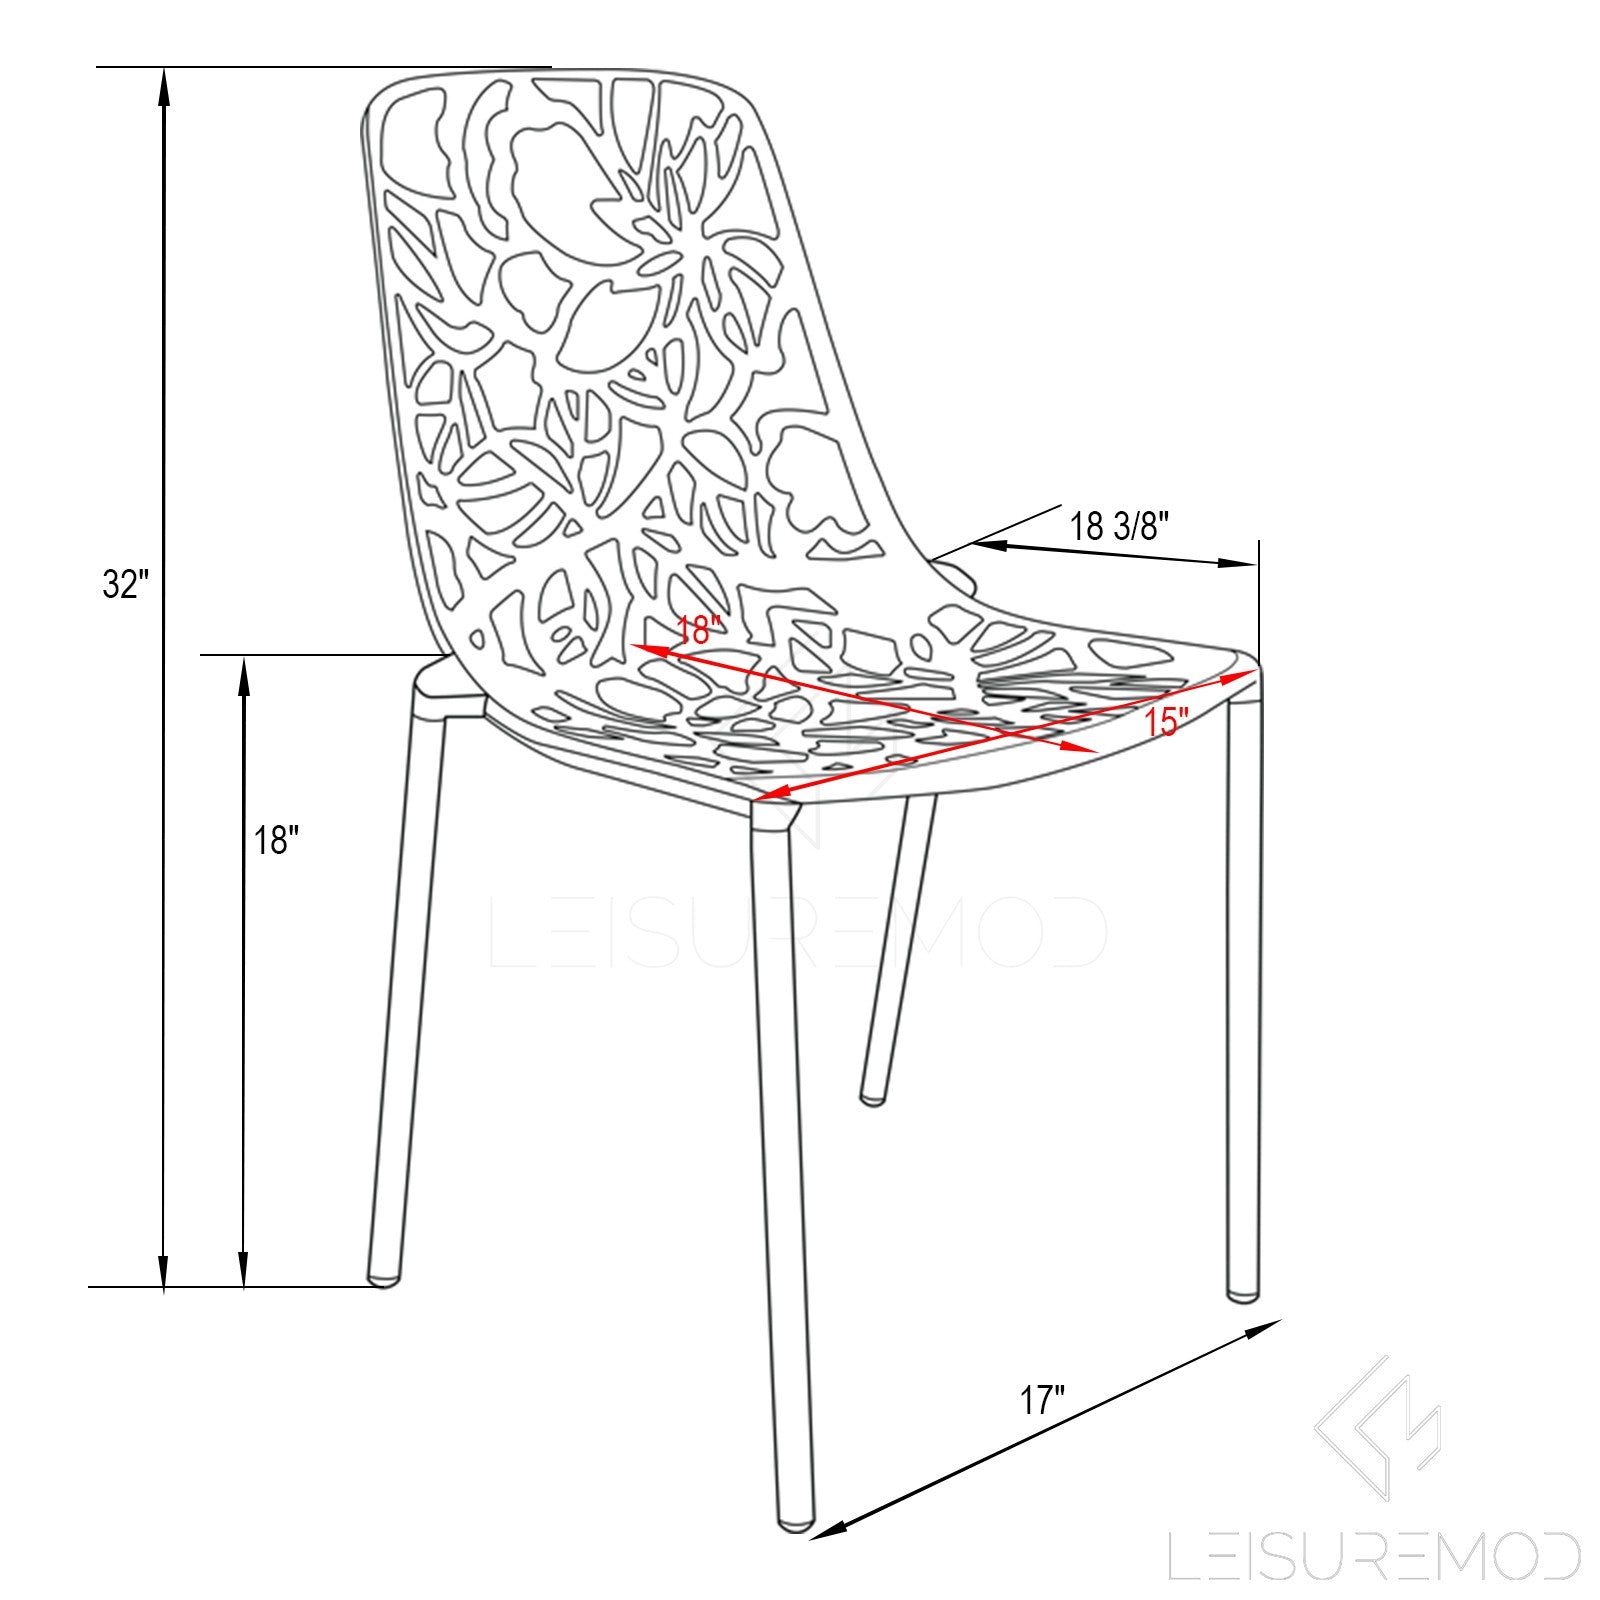 Desire Red Aluminum Side Chair - living-essentials